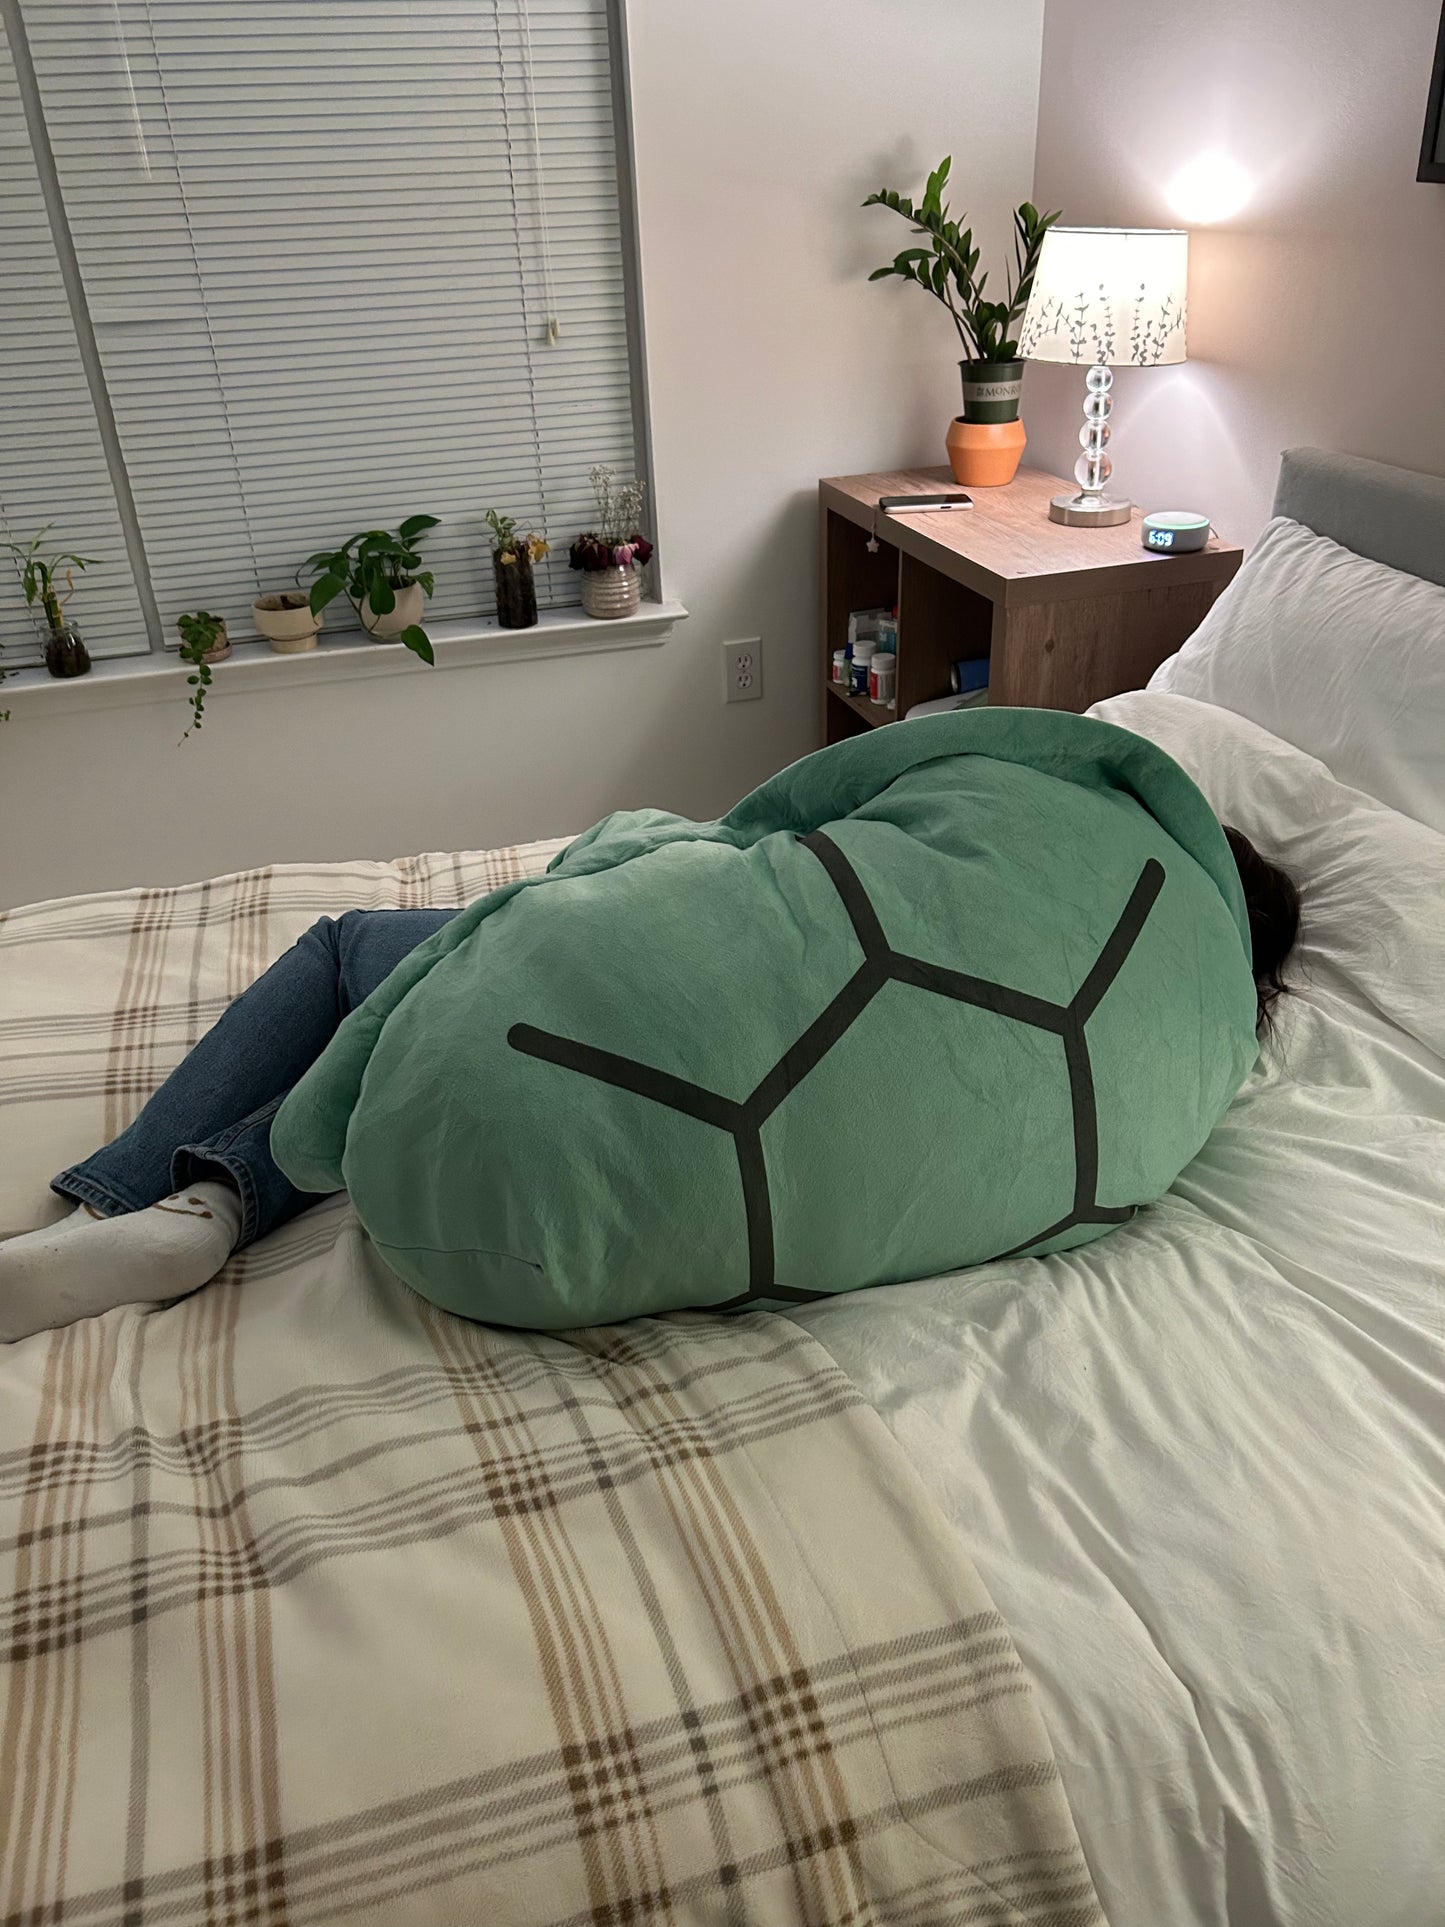 Large Wearable Turtle Shell Plush